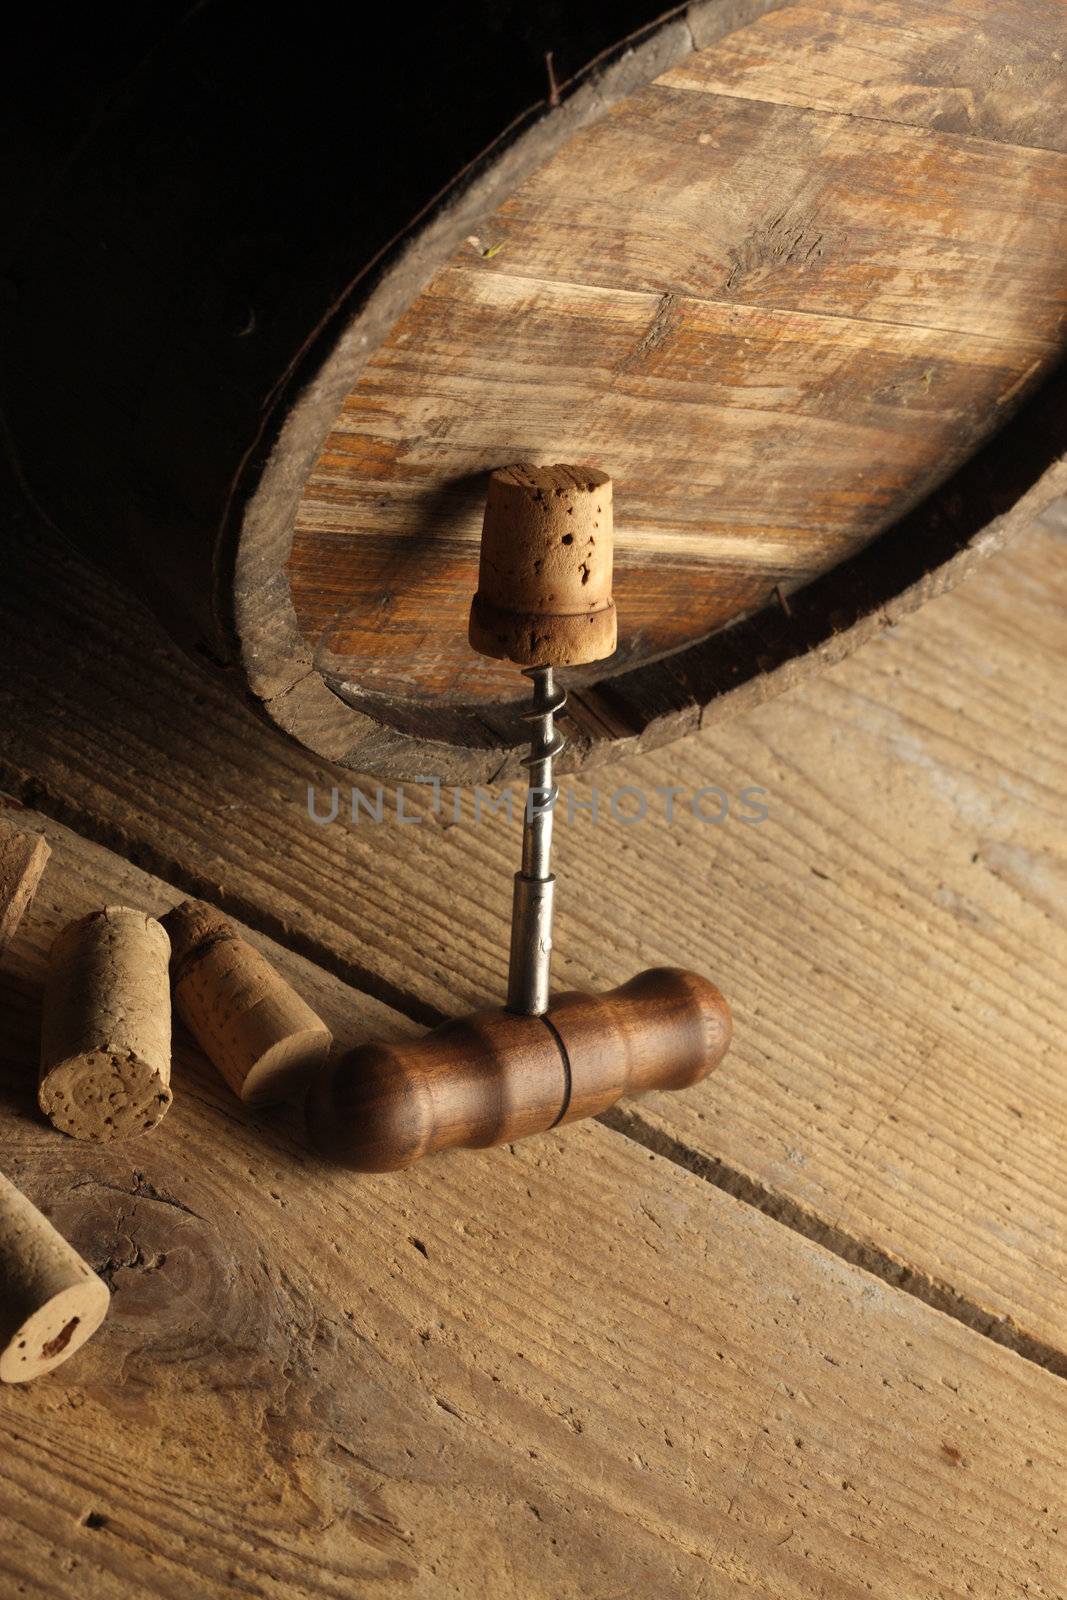 corkscrew and wooden barrel